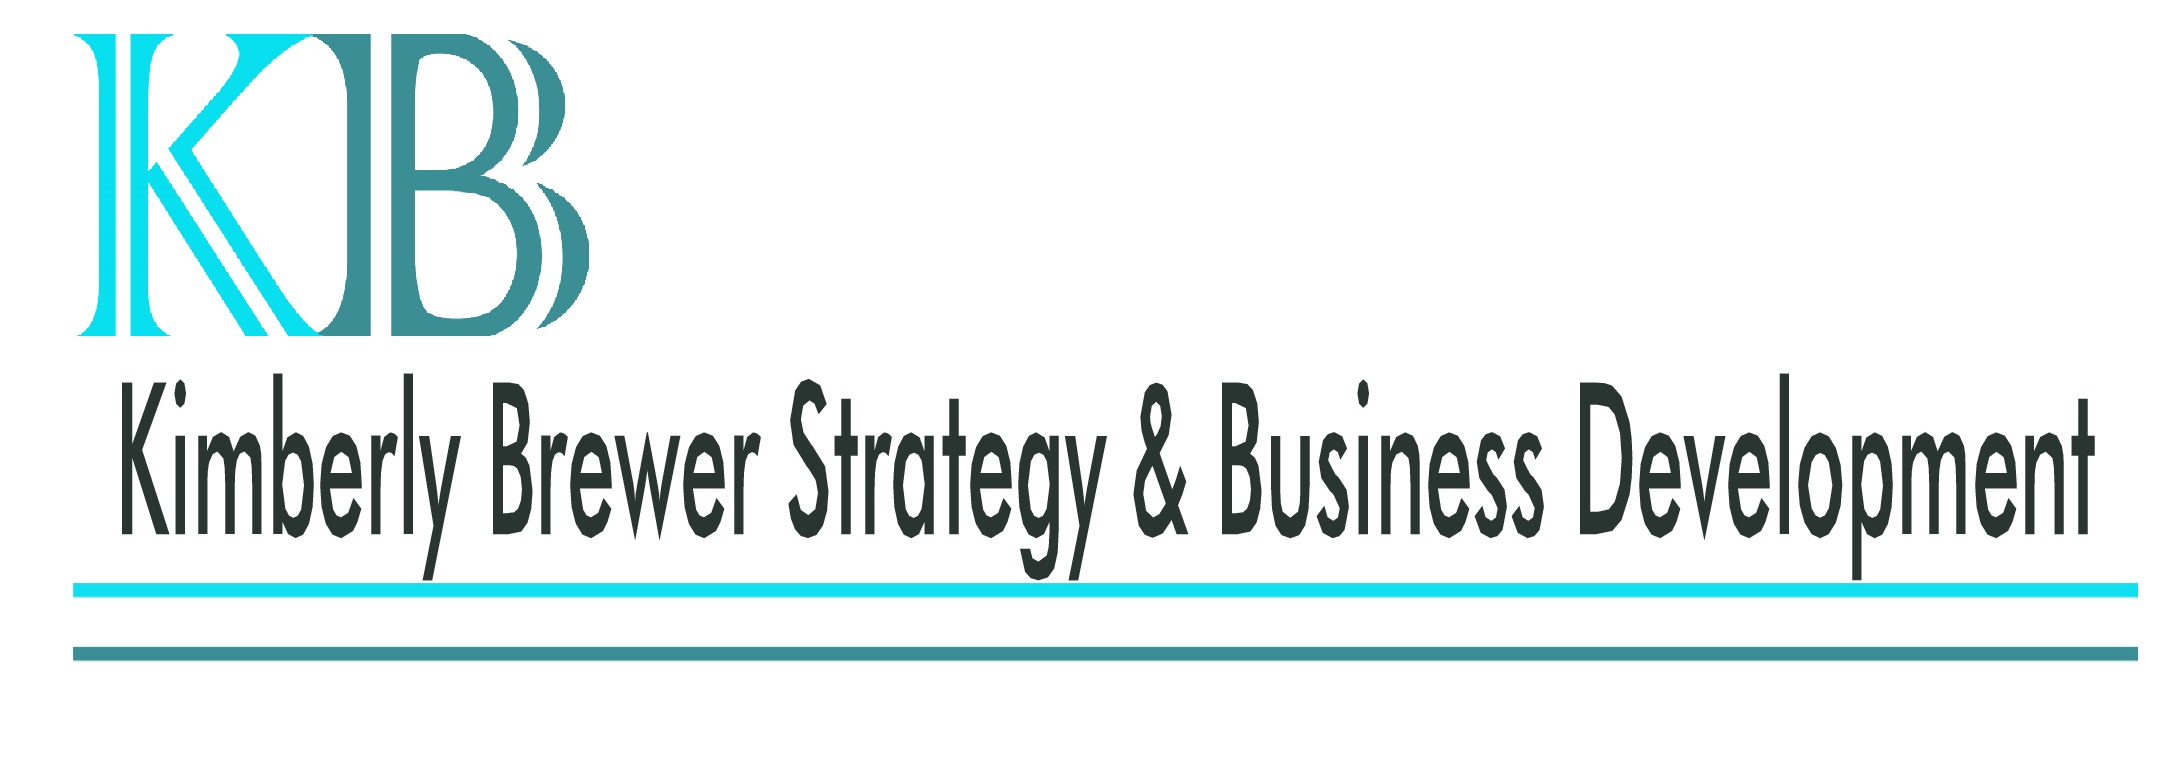 Kimberly Brewer Strategy & Business Development